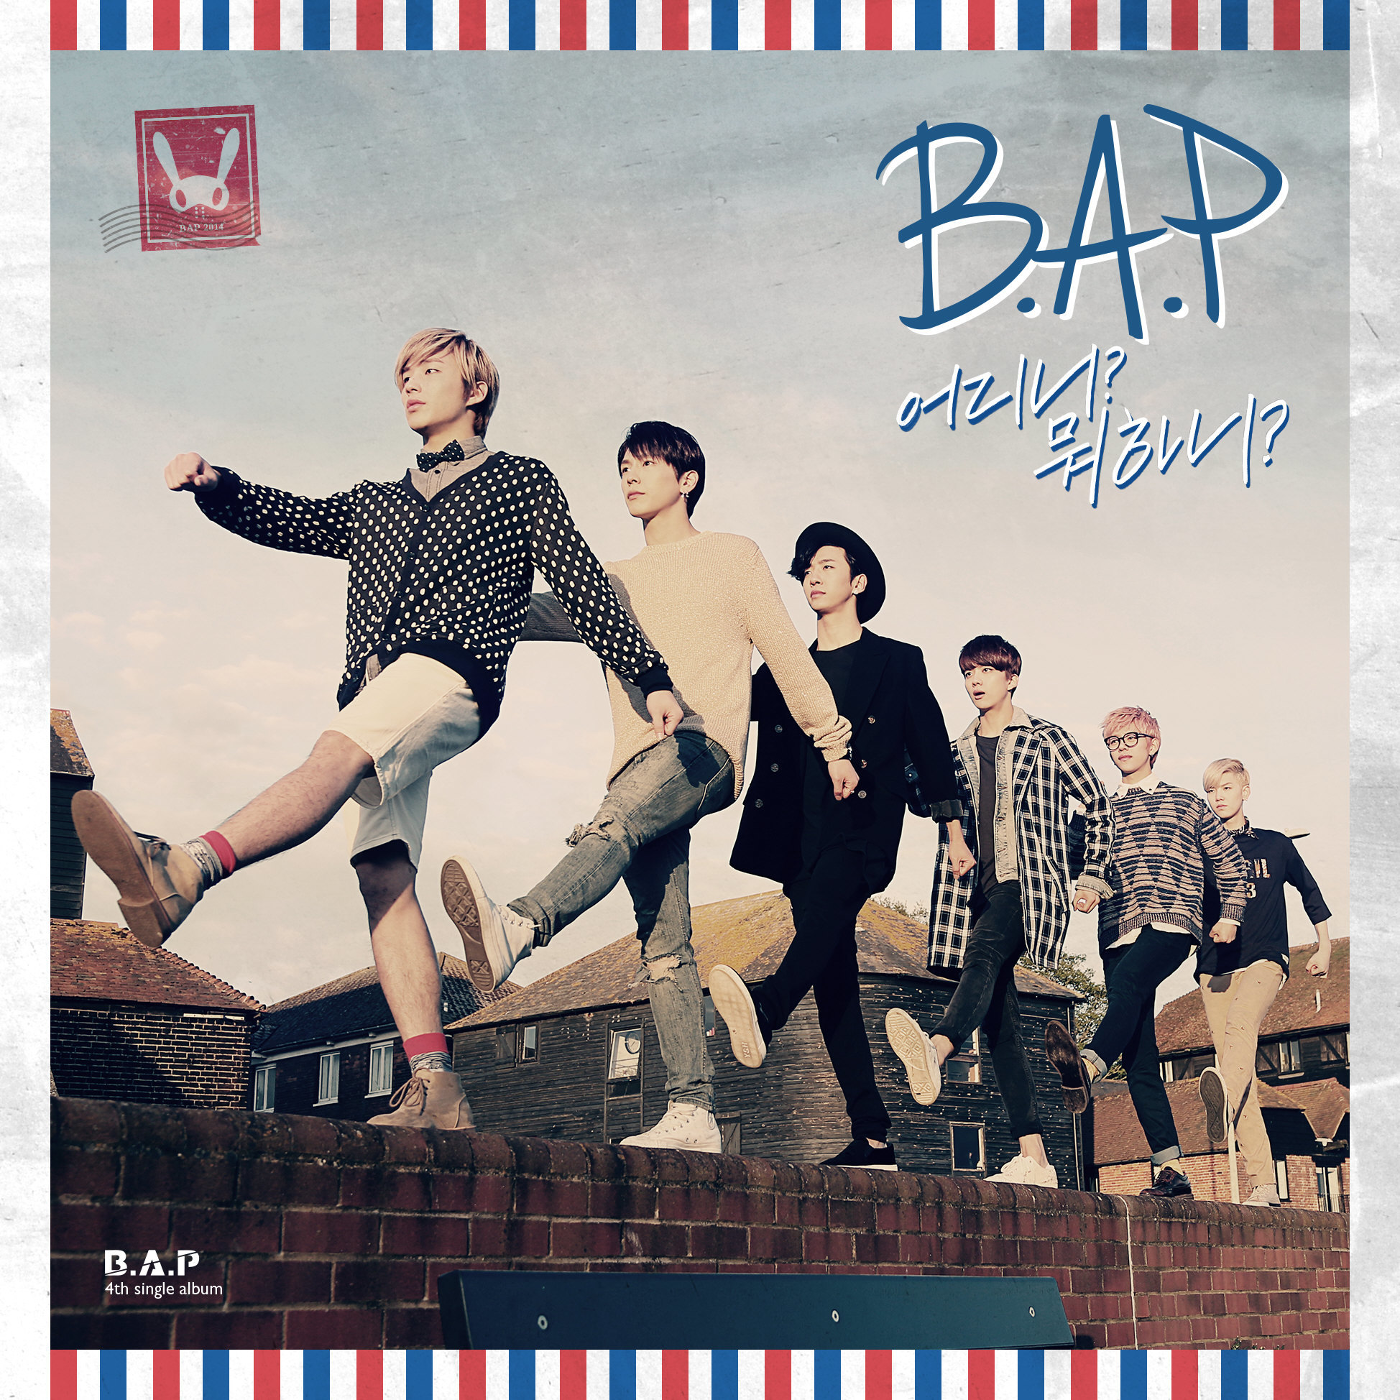 B.A.P Single Album Vol. 4 - B.A.P Unplugged 2014